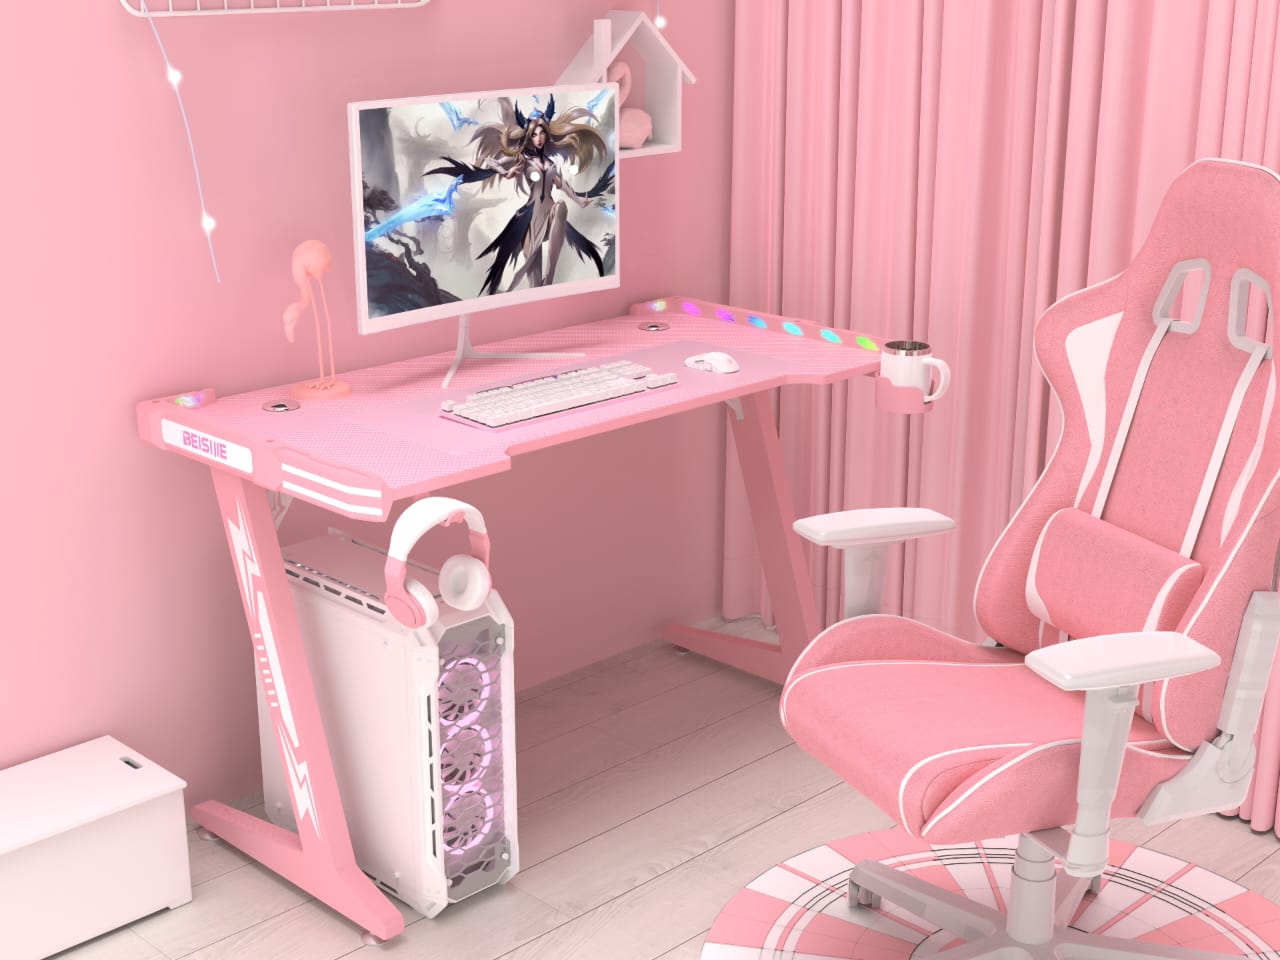 Z8 120CM Gaming Desk With Led Lights, Cup Holder and Headset Holder - Pink